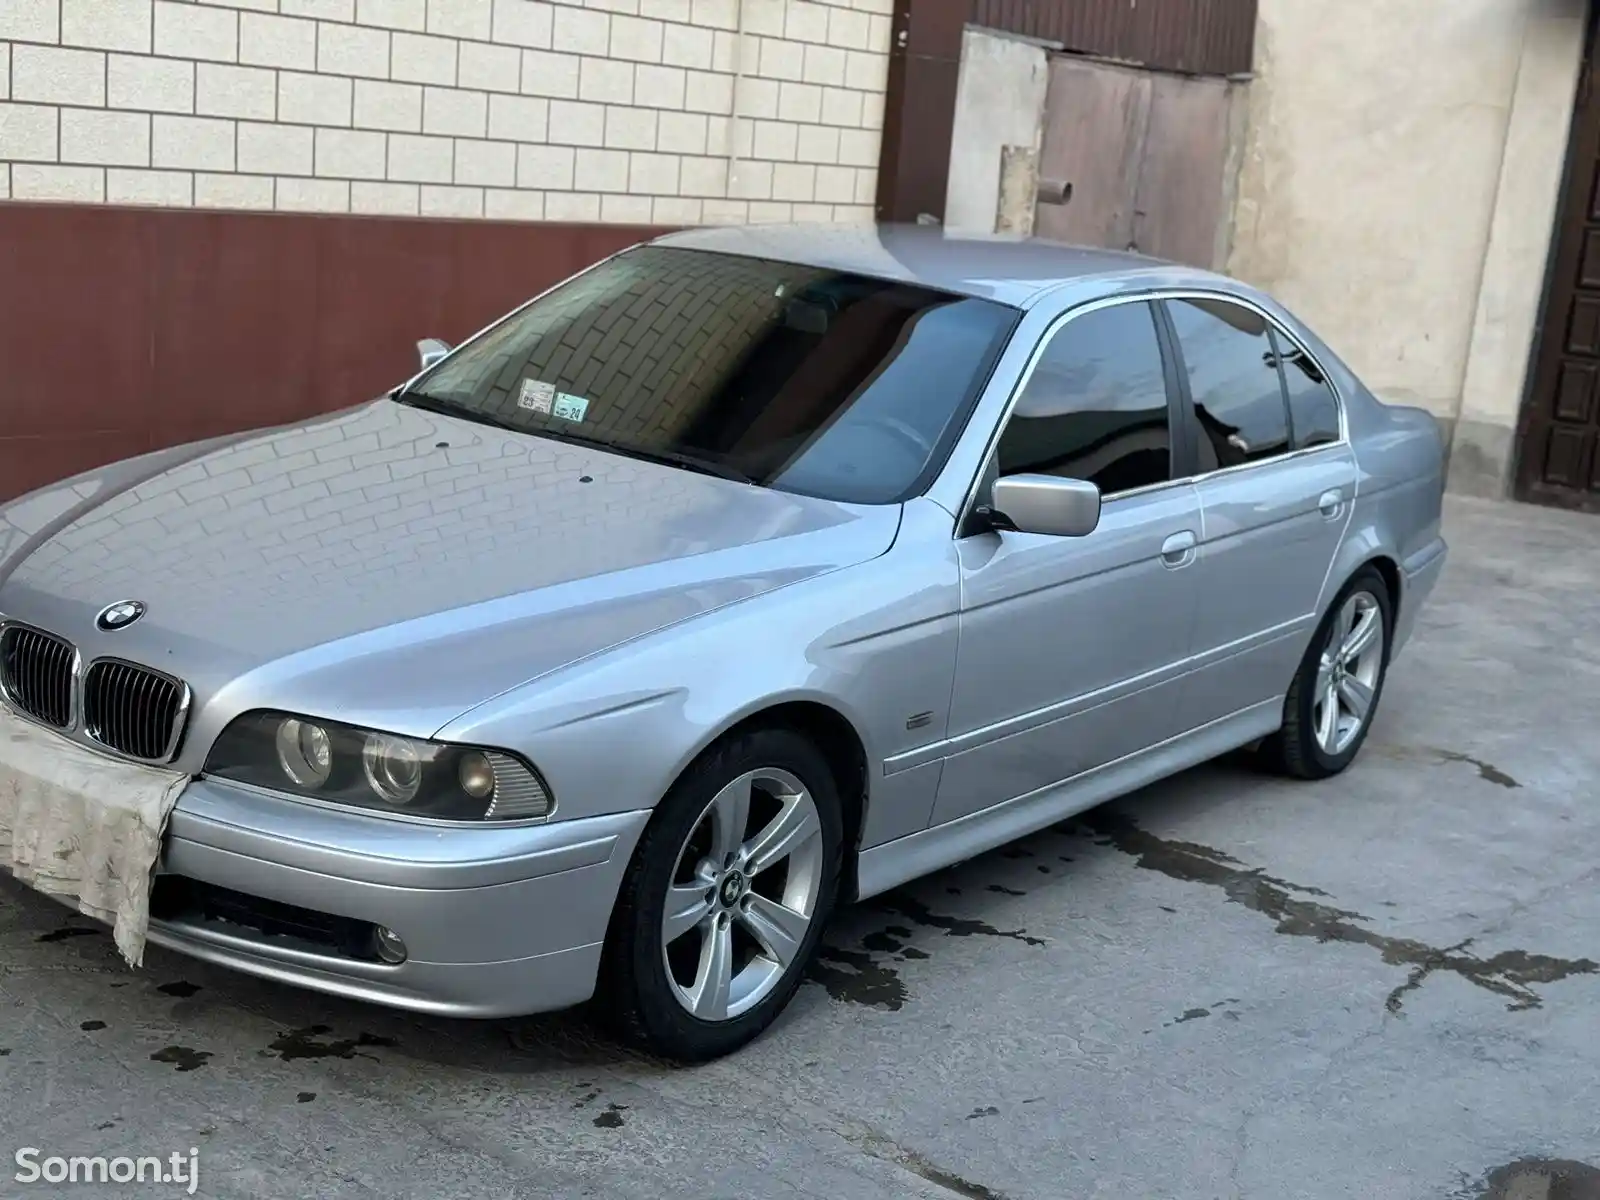 BMW 5 series, 2002-2